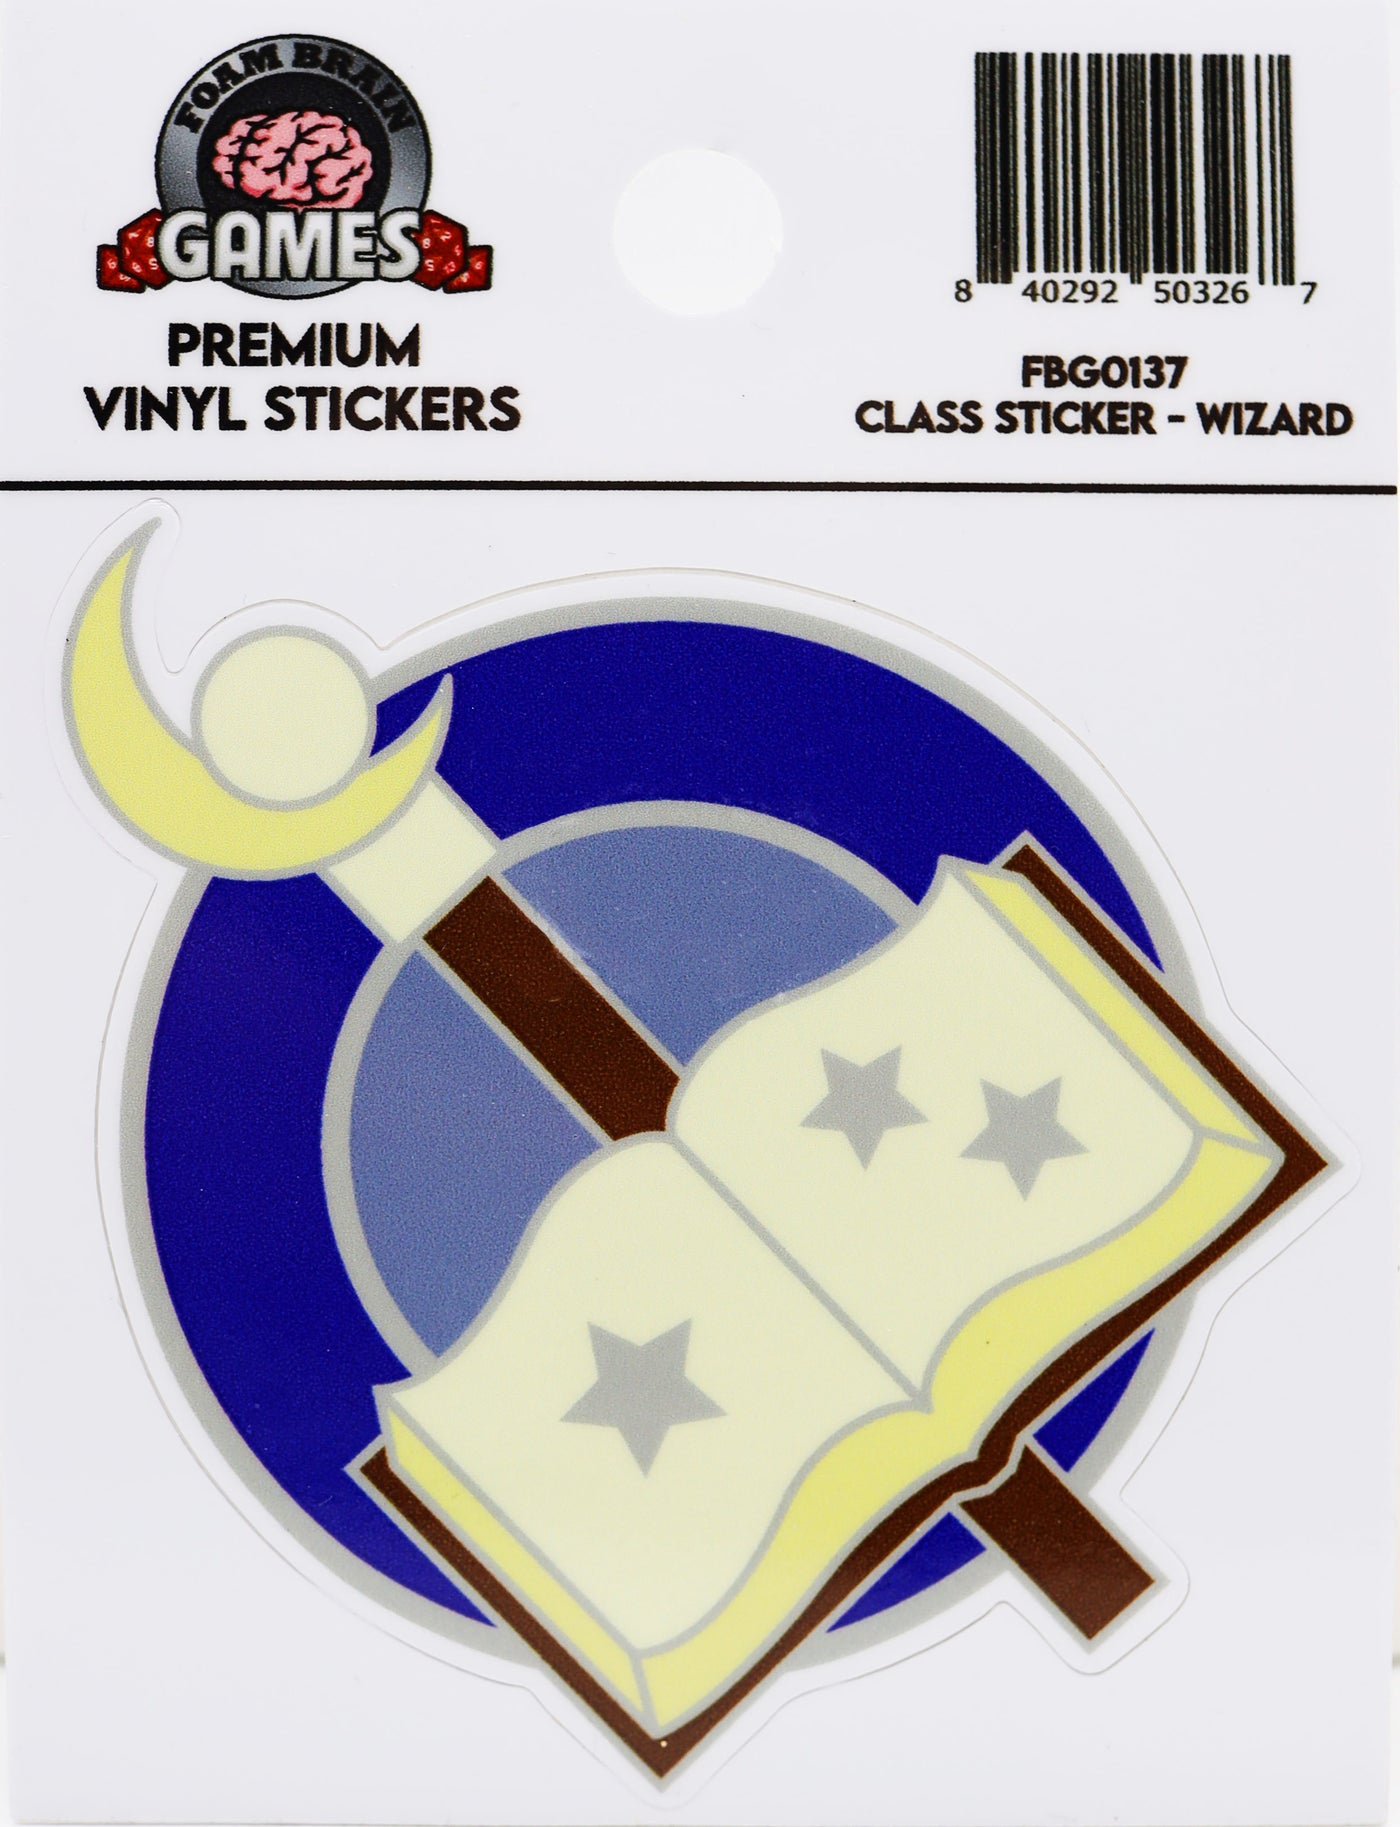 Class Sticker - Wizard Stickers Foam Brain Games